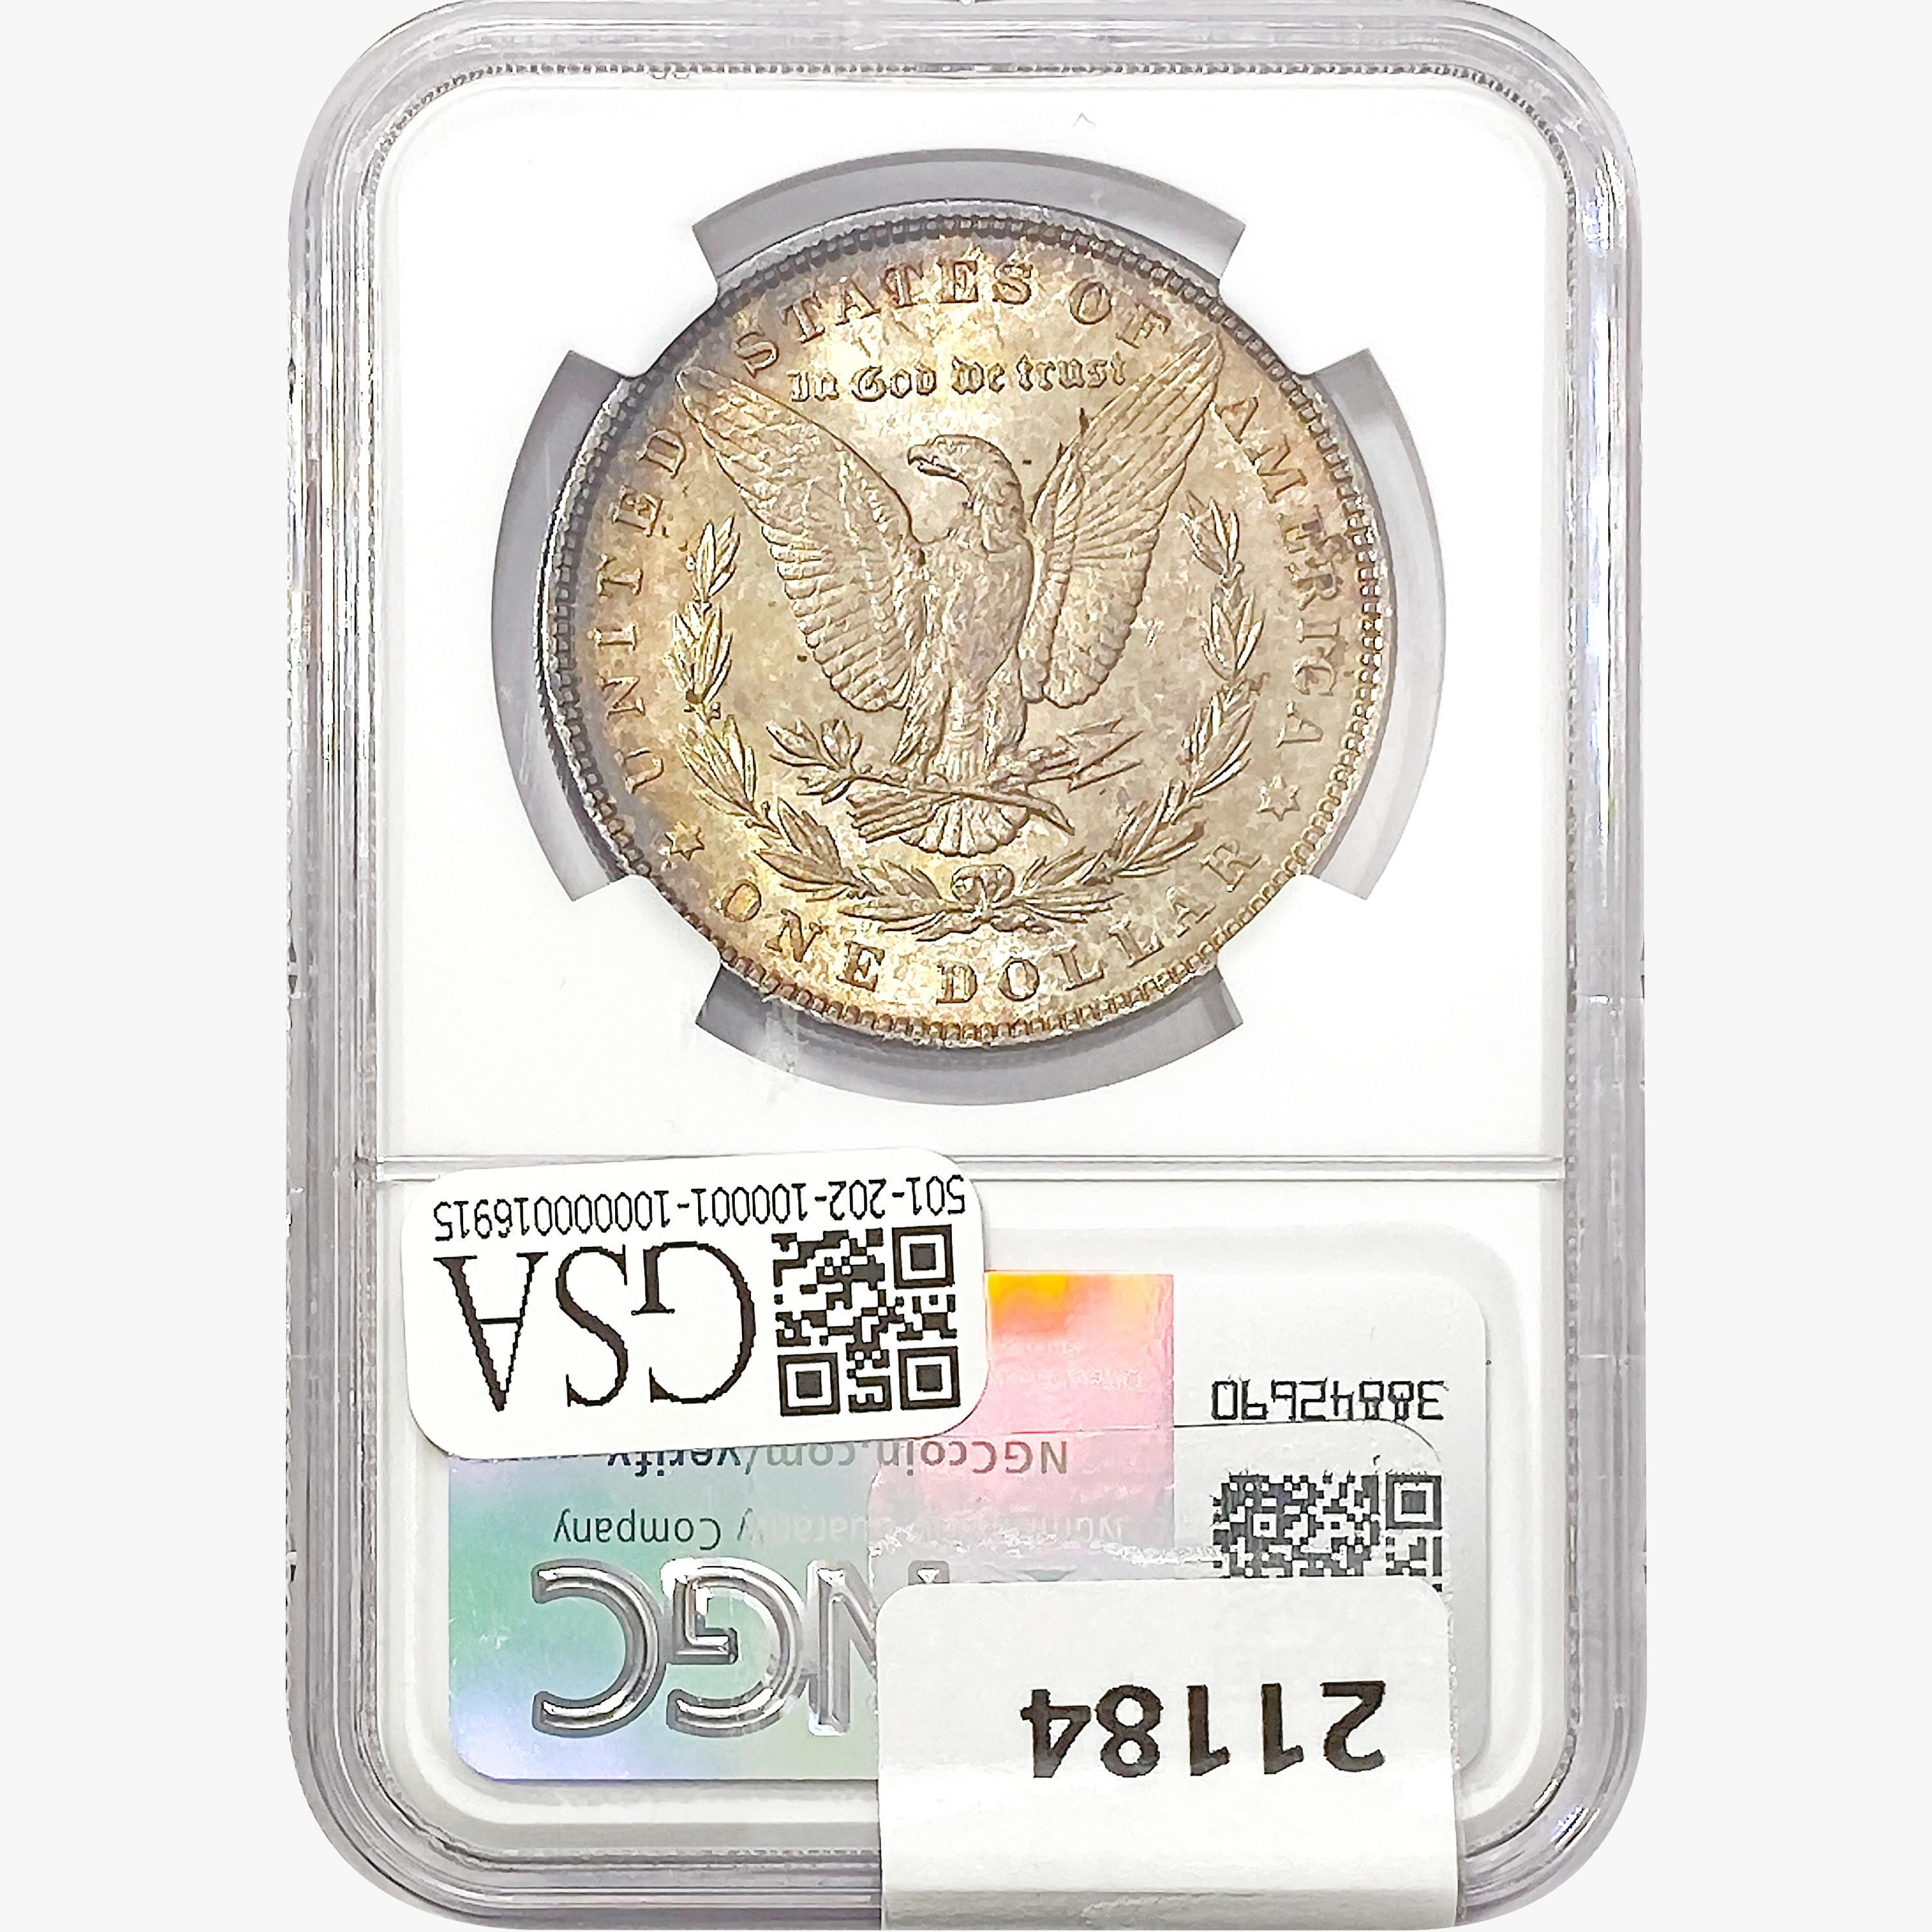 1890 Morgan Silver Dollar NGC MS62